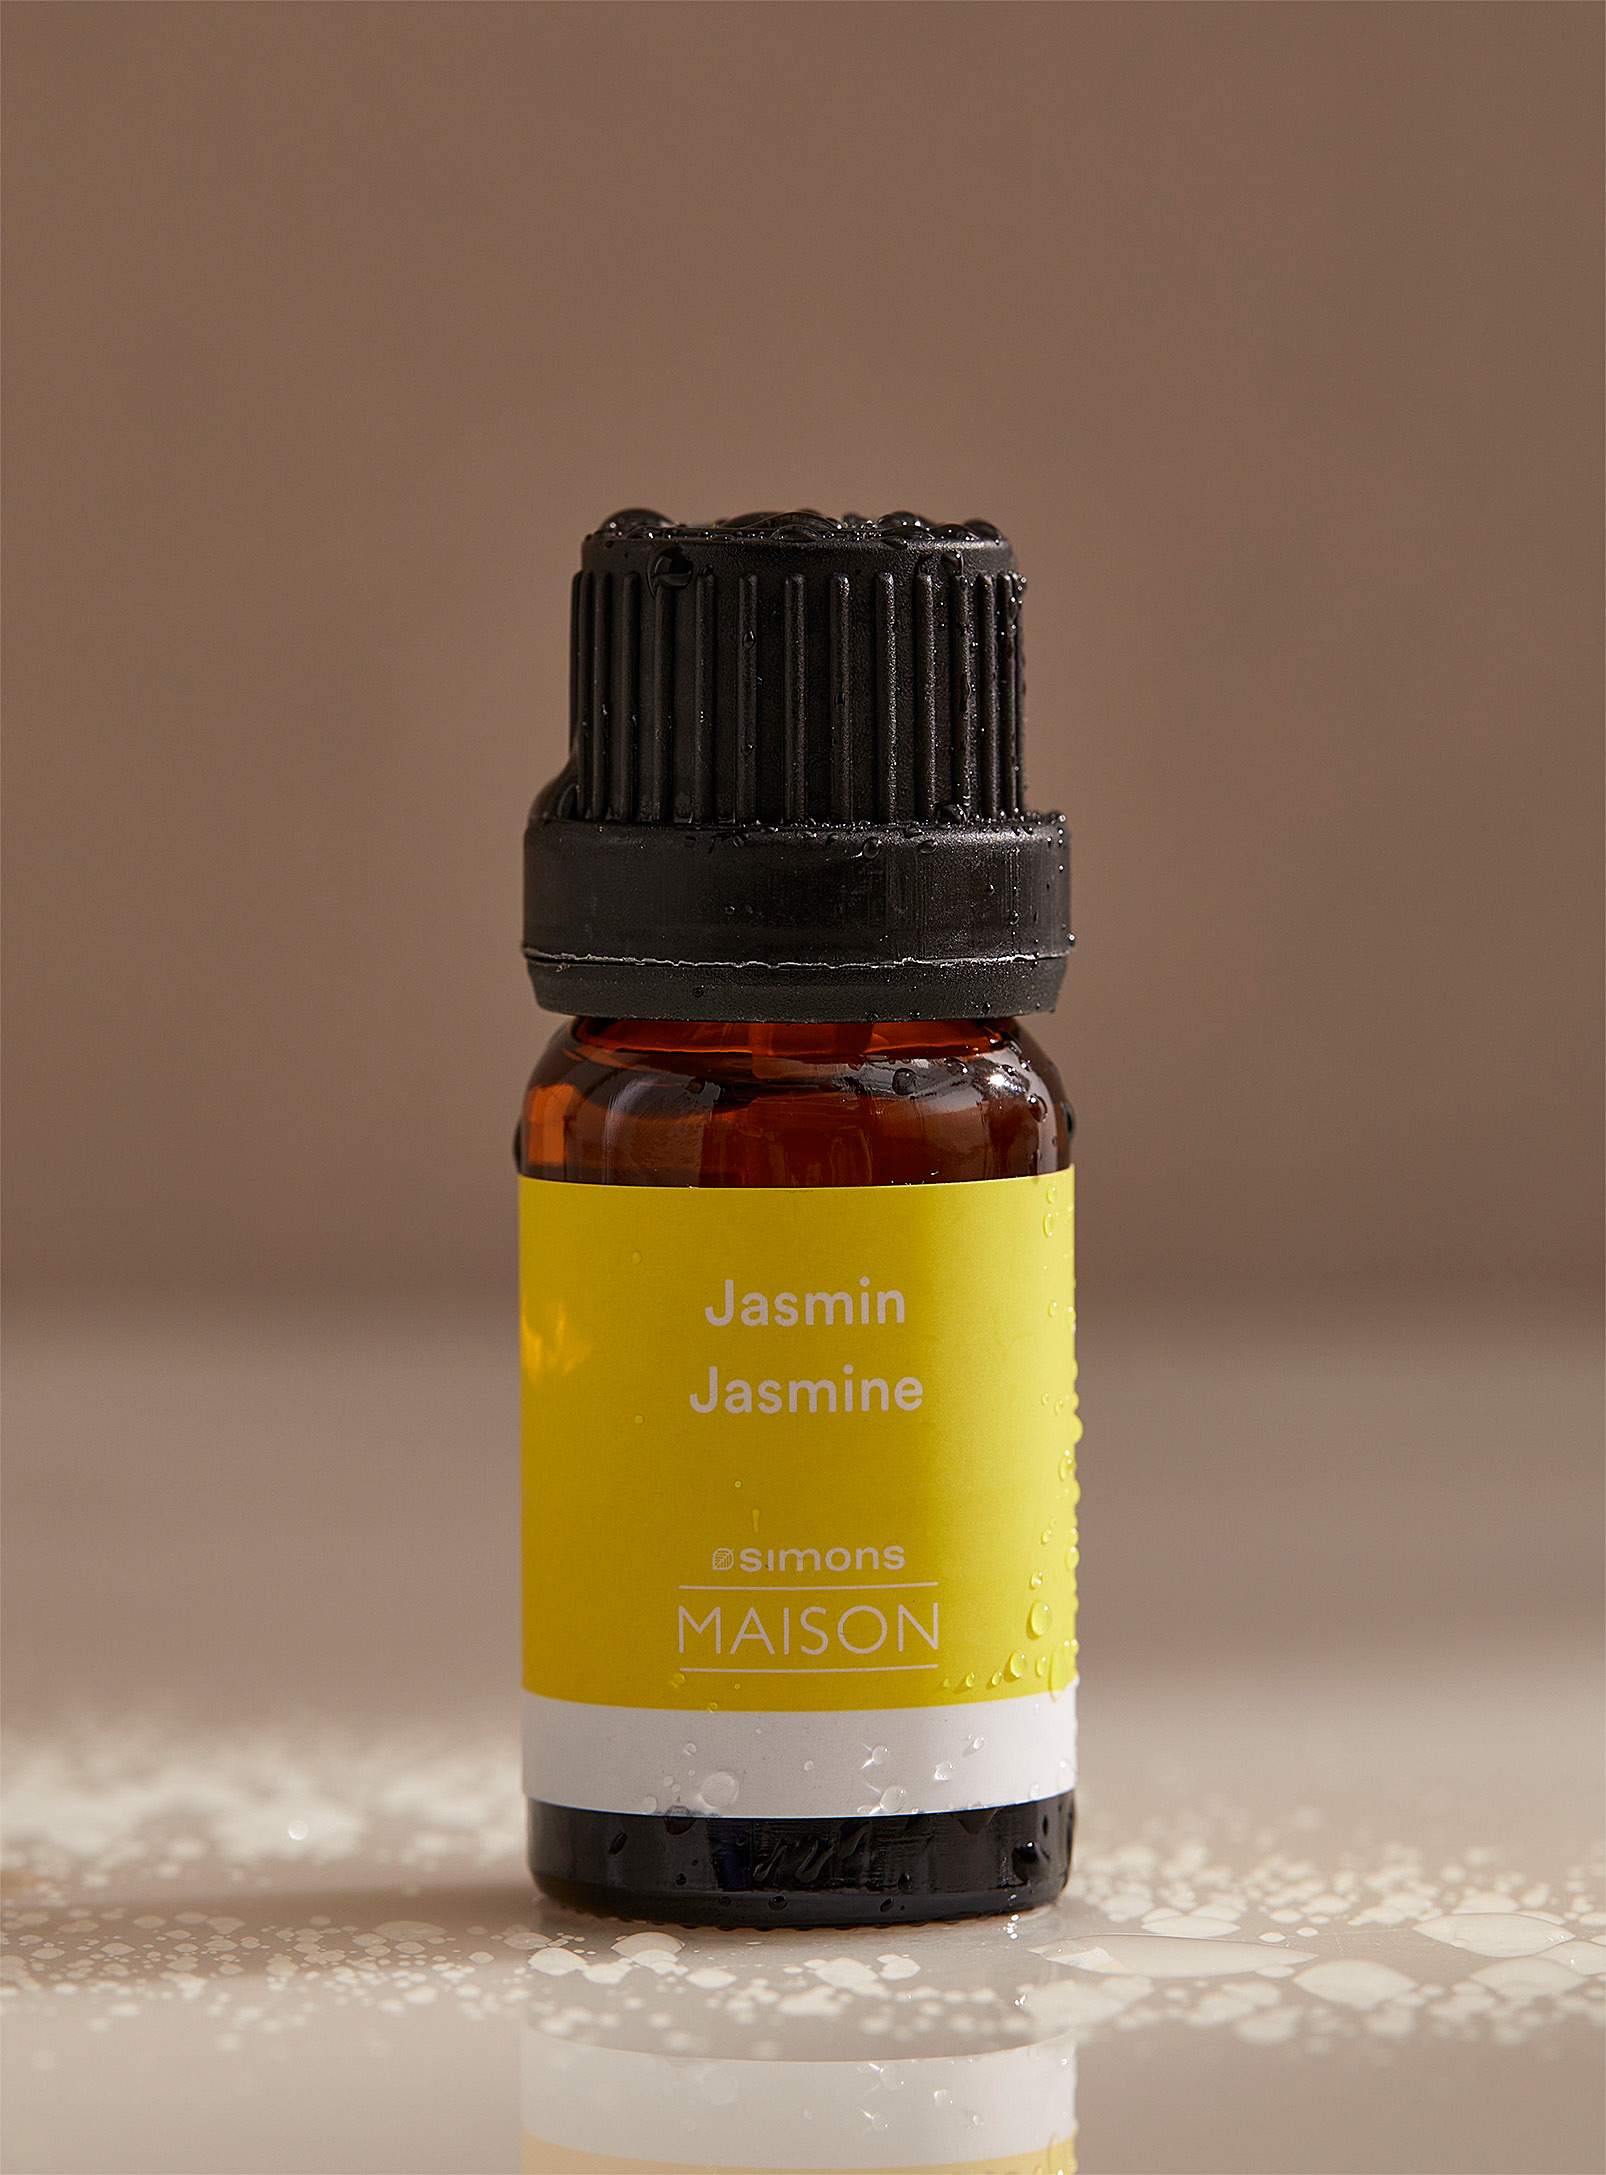 Simons Maison Jasmine Essential Oil In Yellow